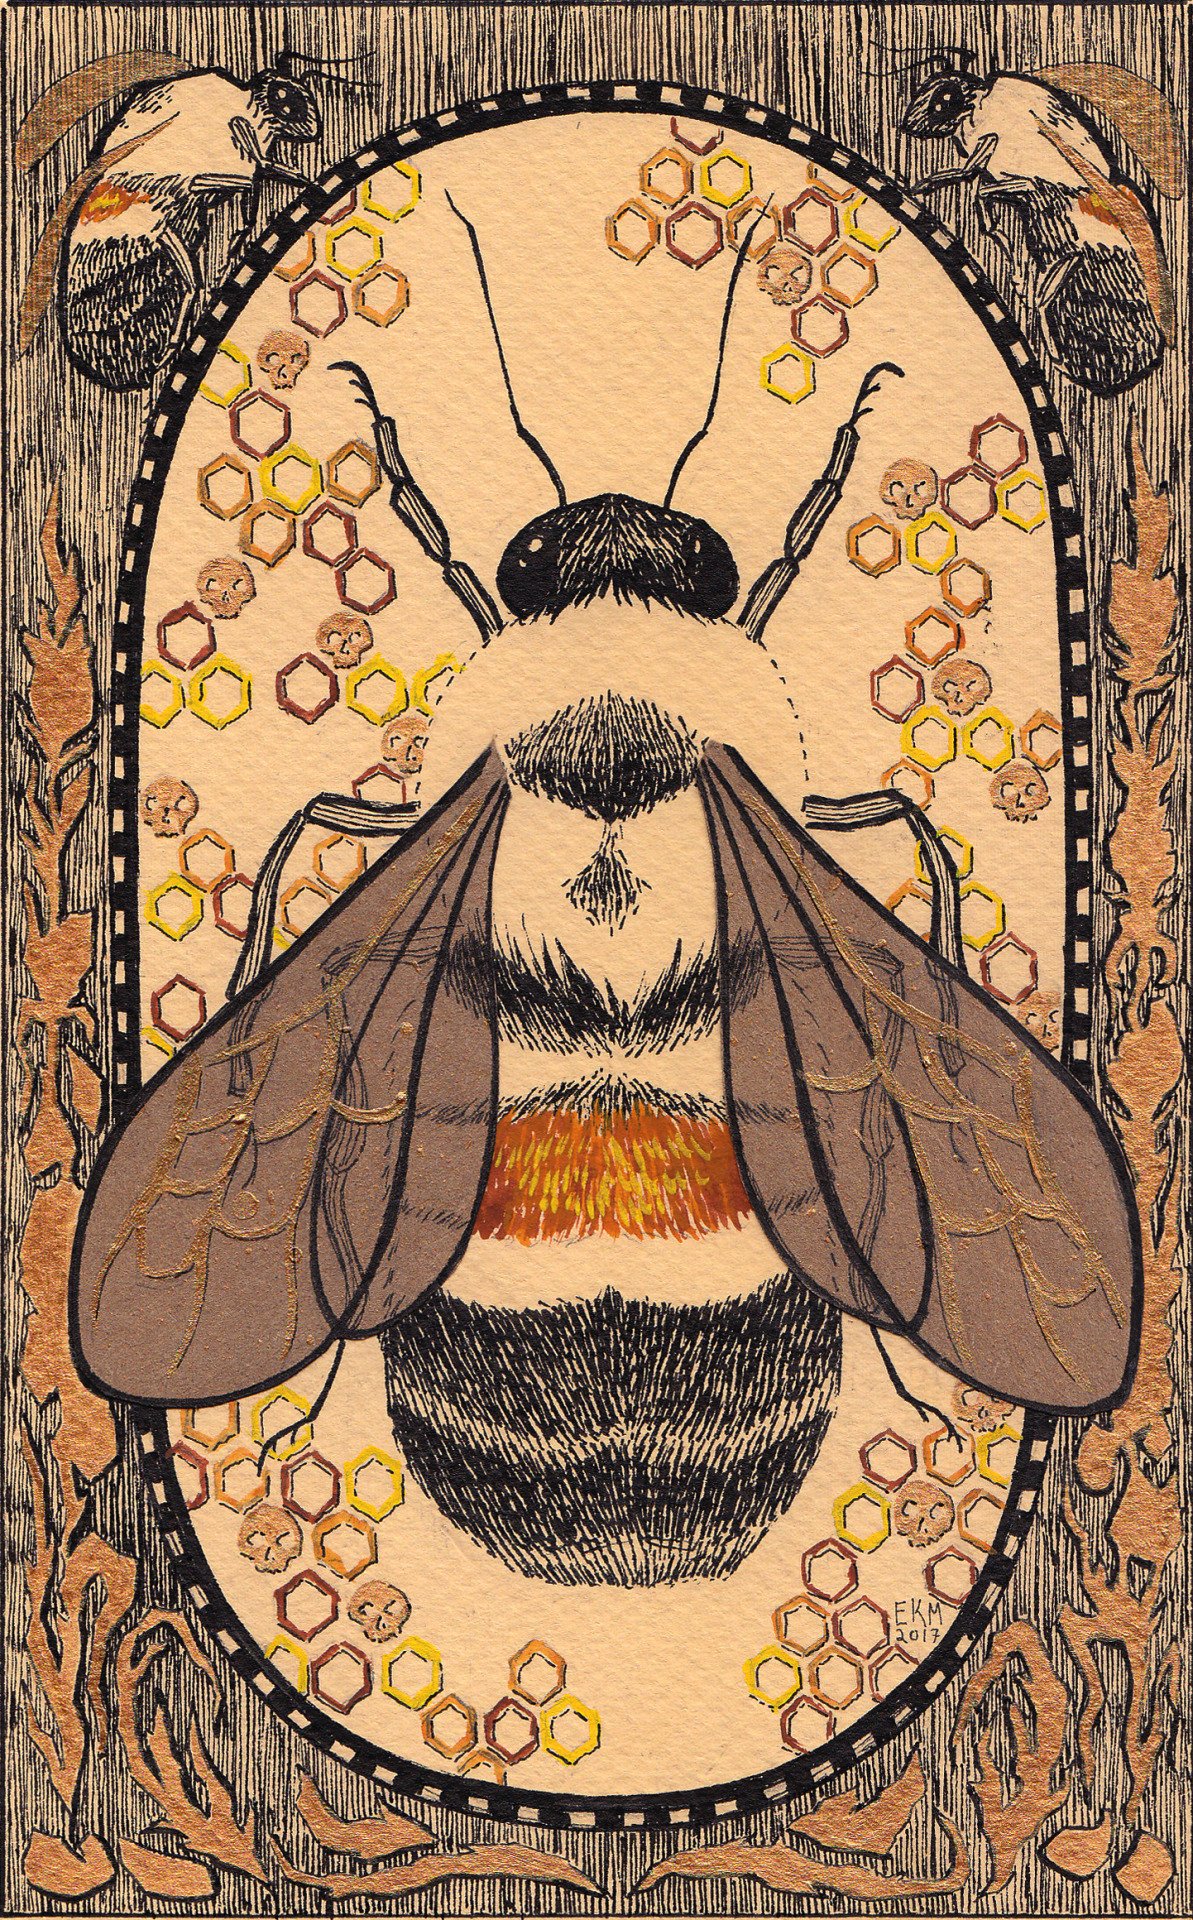 Пчелы арты